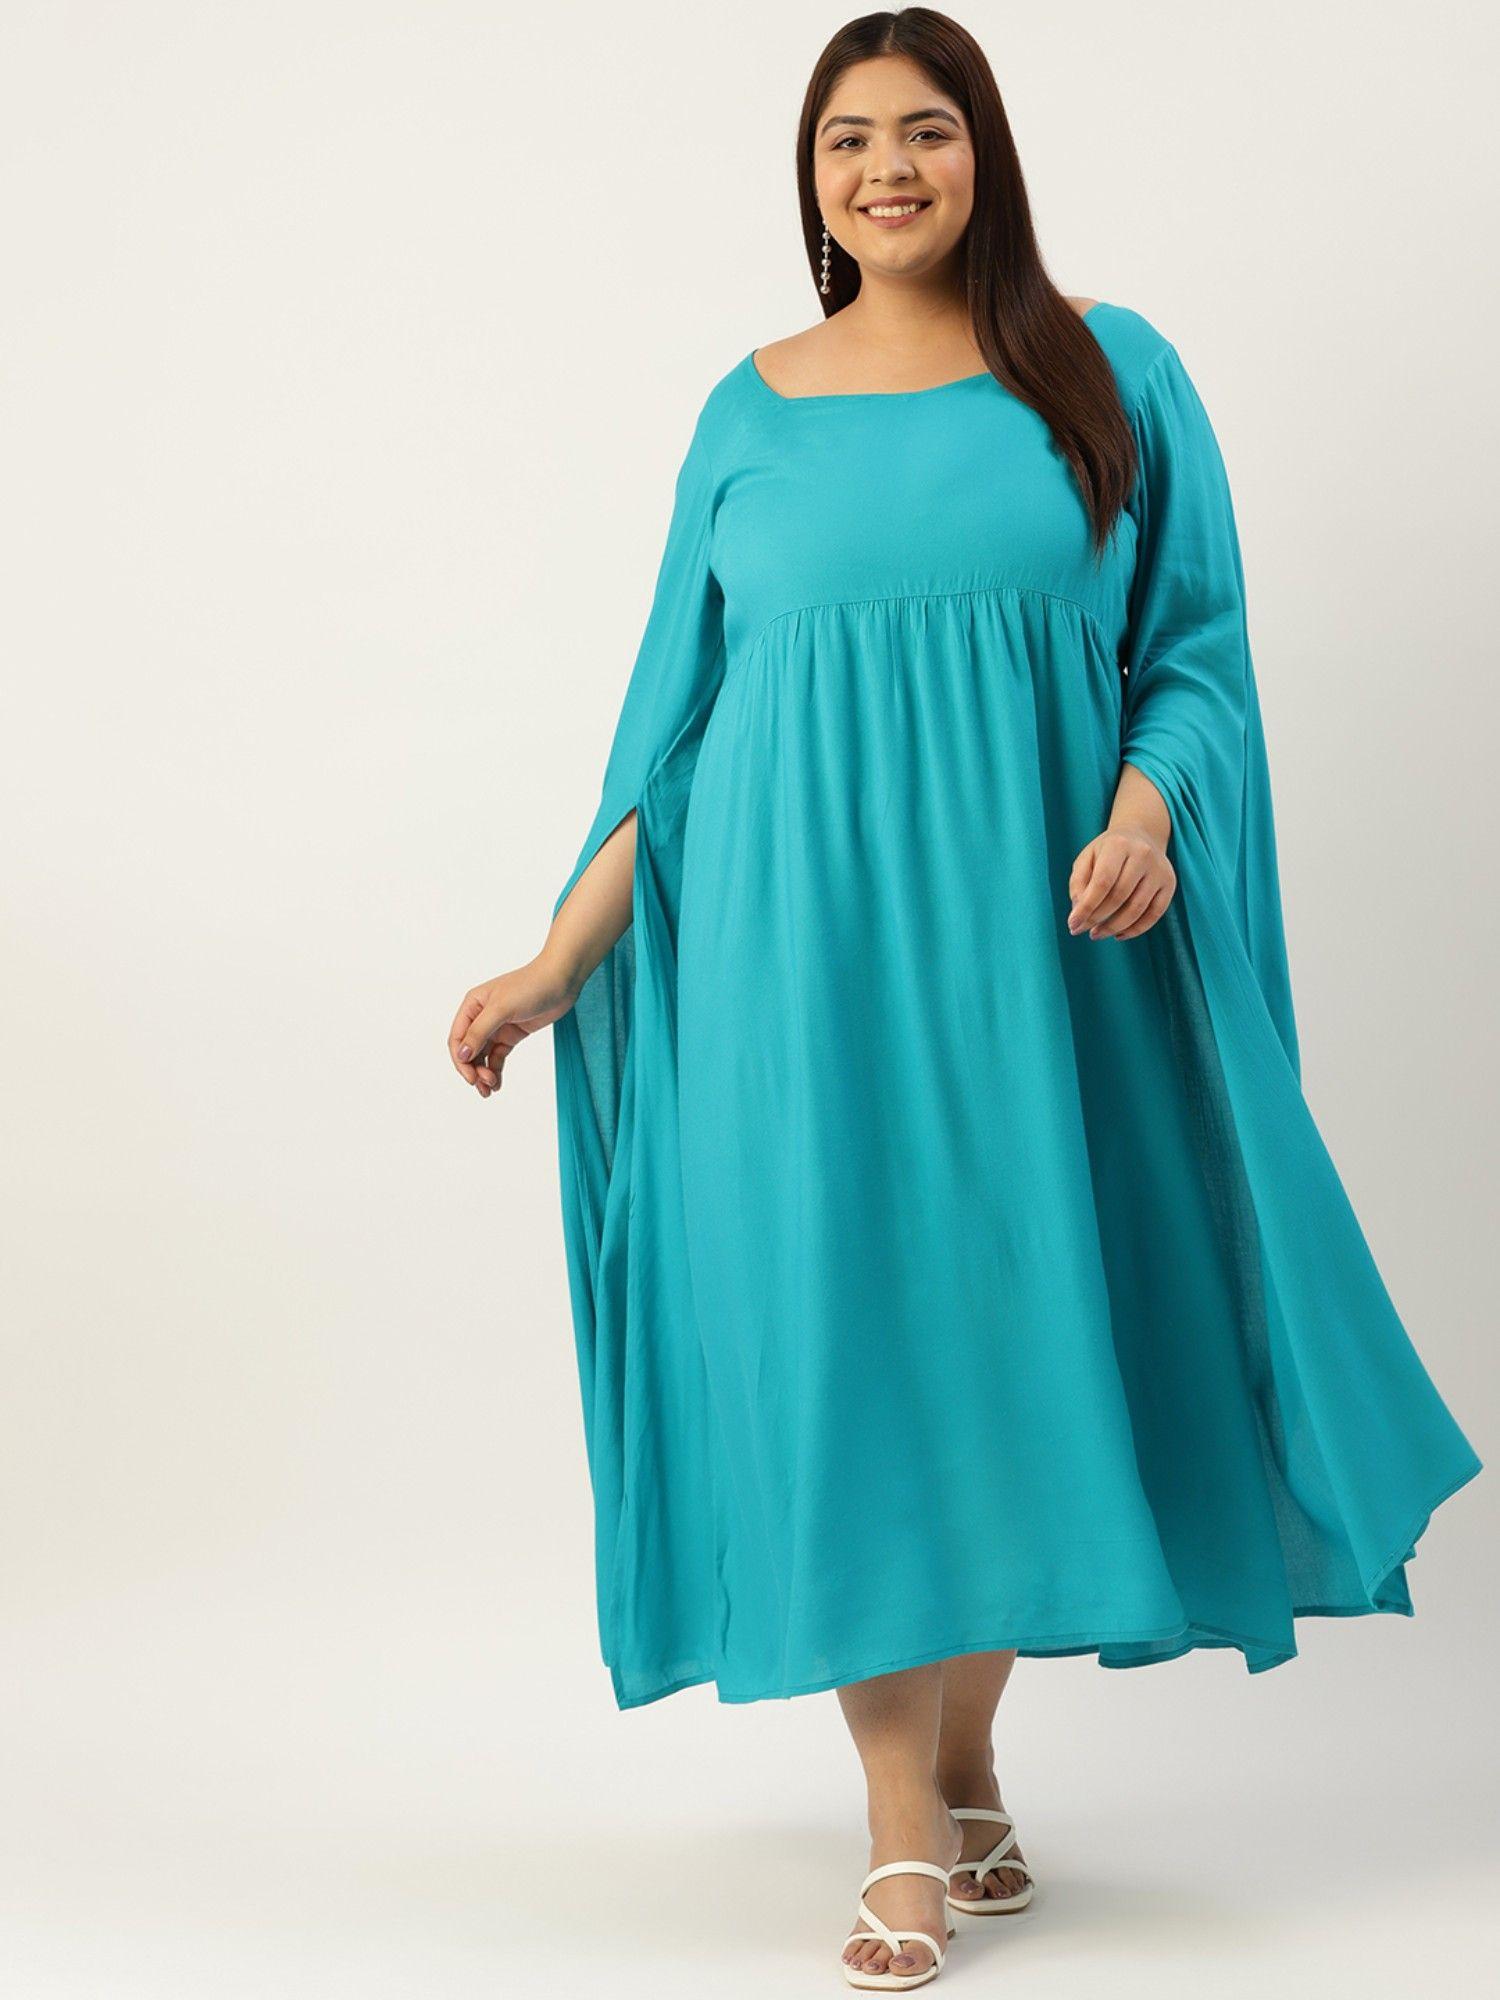 plus size women's teal blue solid color slit sleeves a-line dress